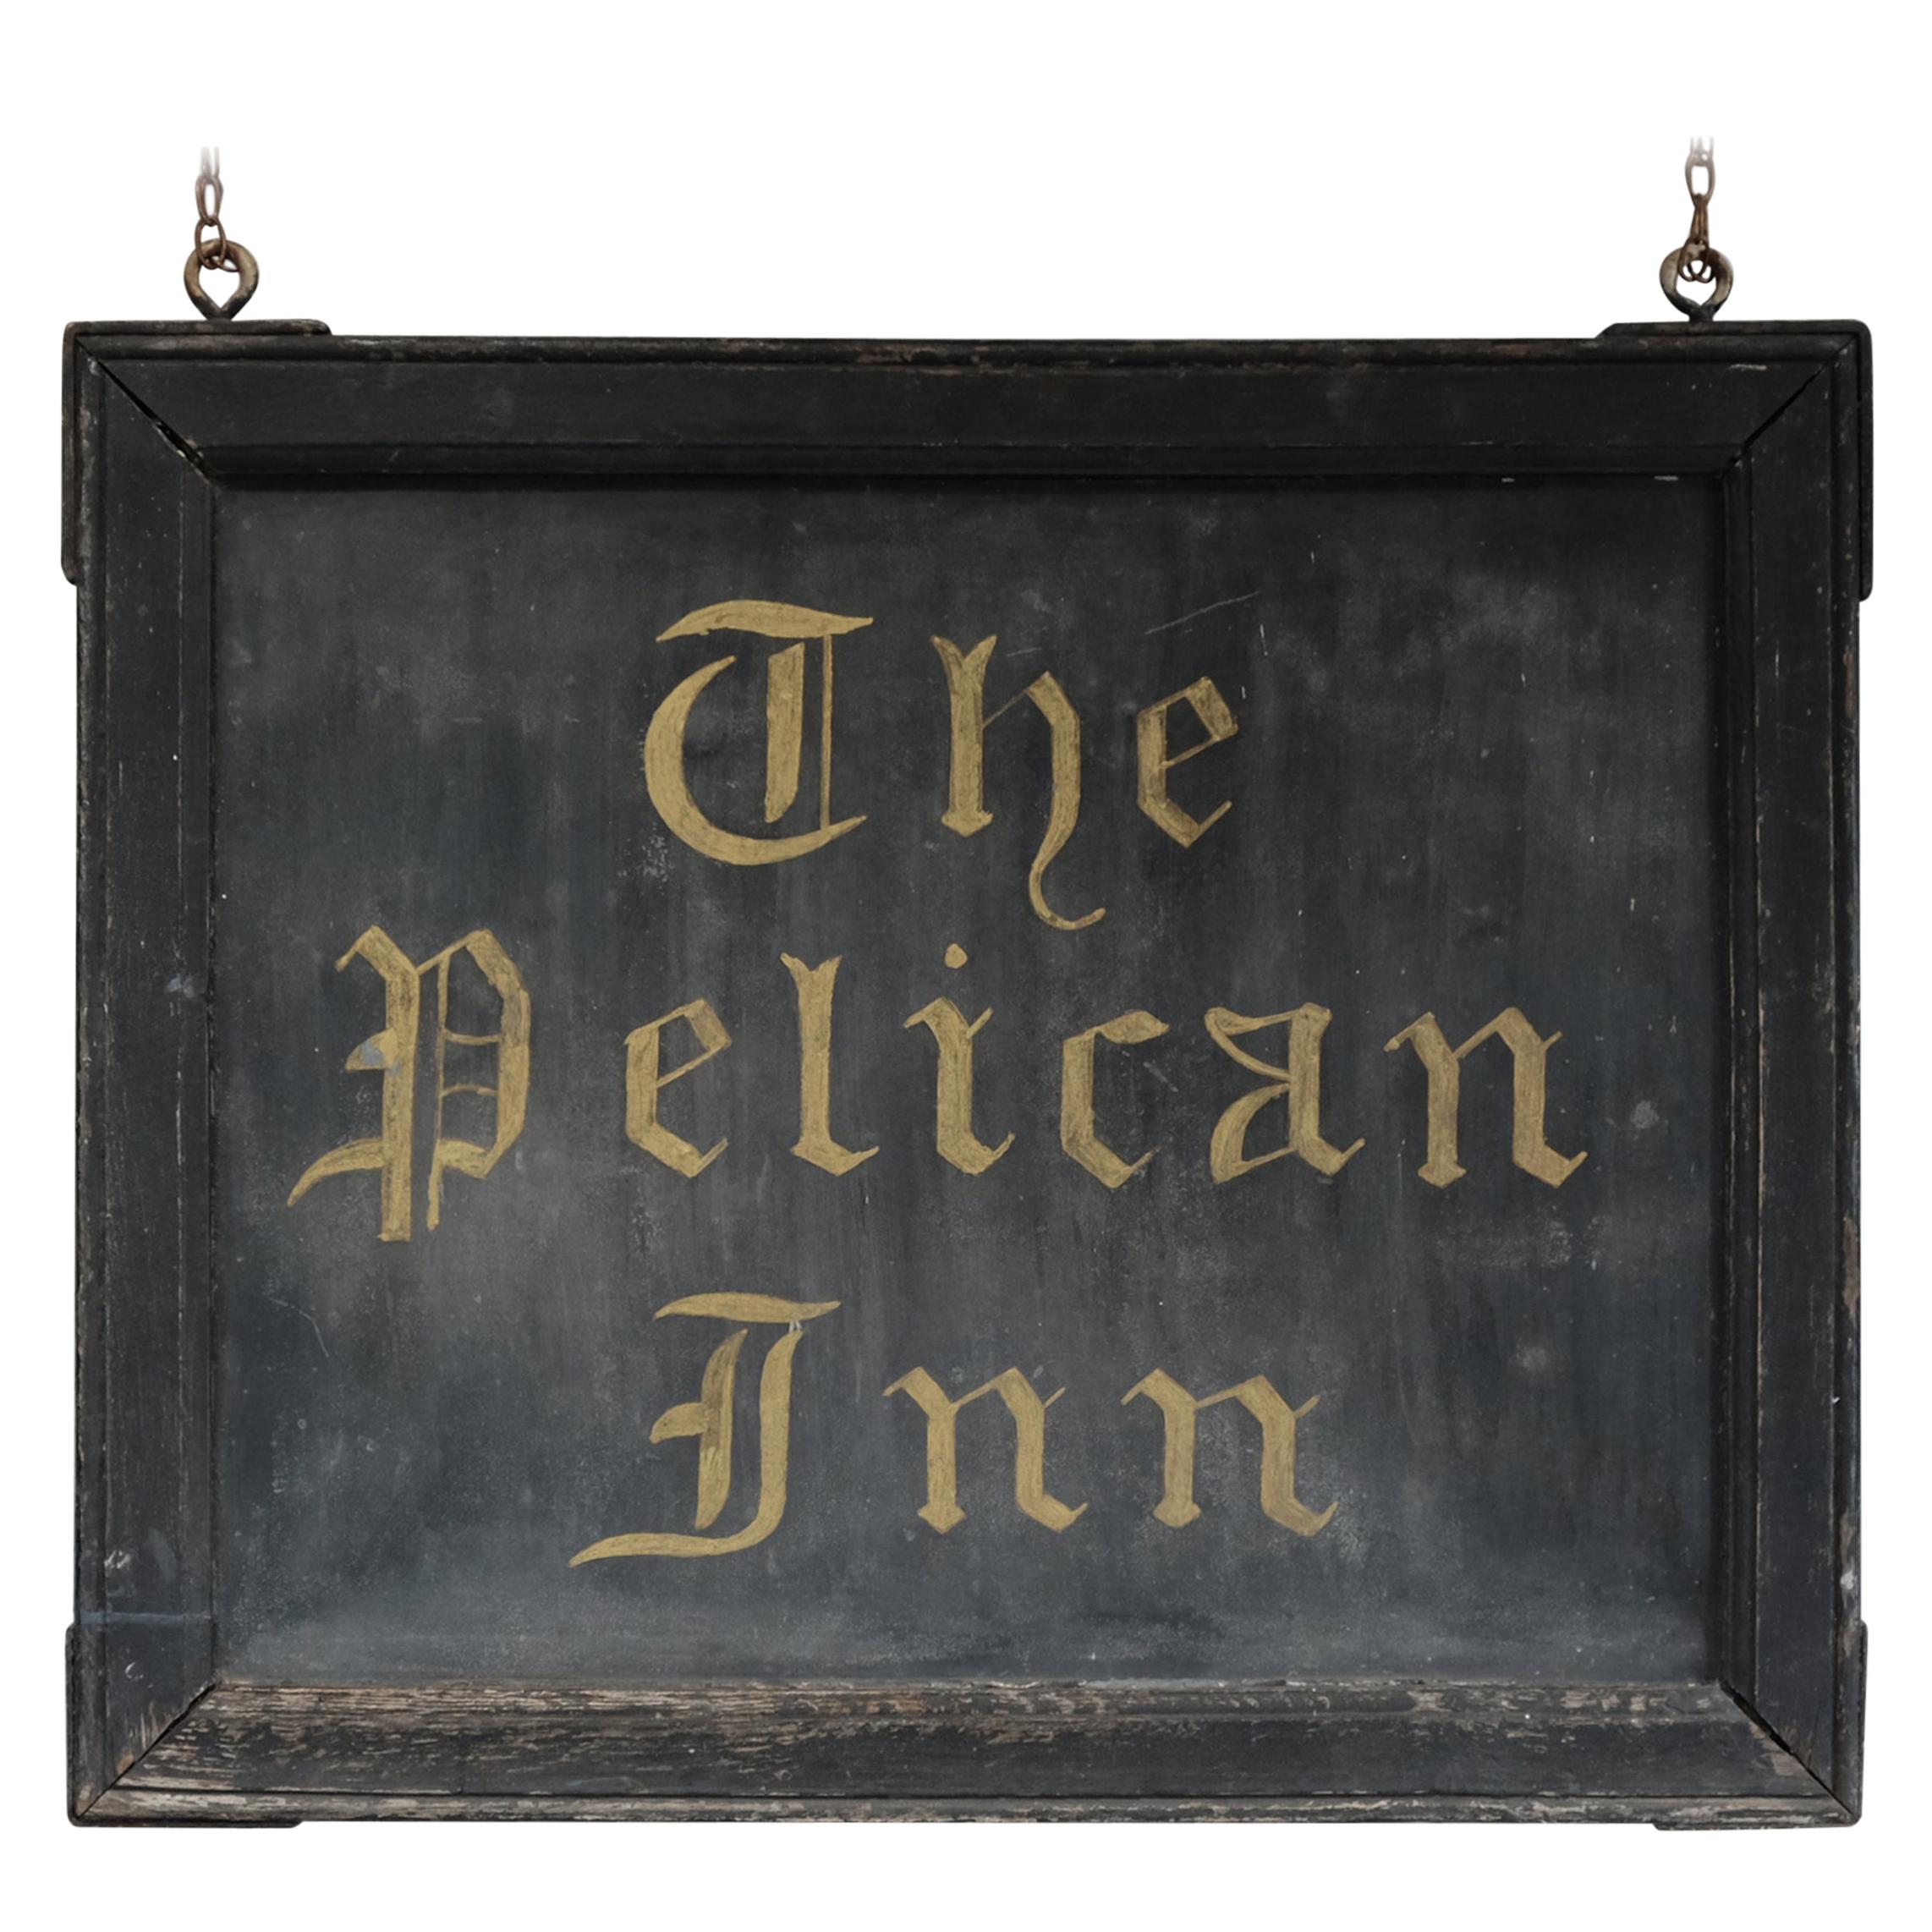 Original Painted English Tavern Sign, Pelican Inn, 19th Century, Country Pub